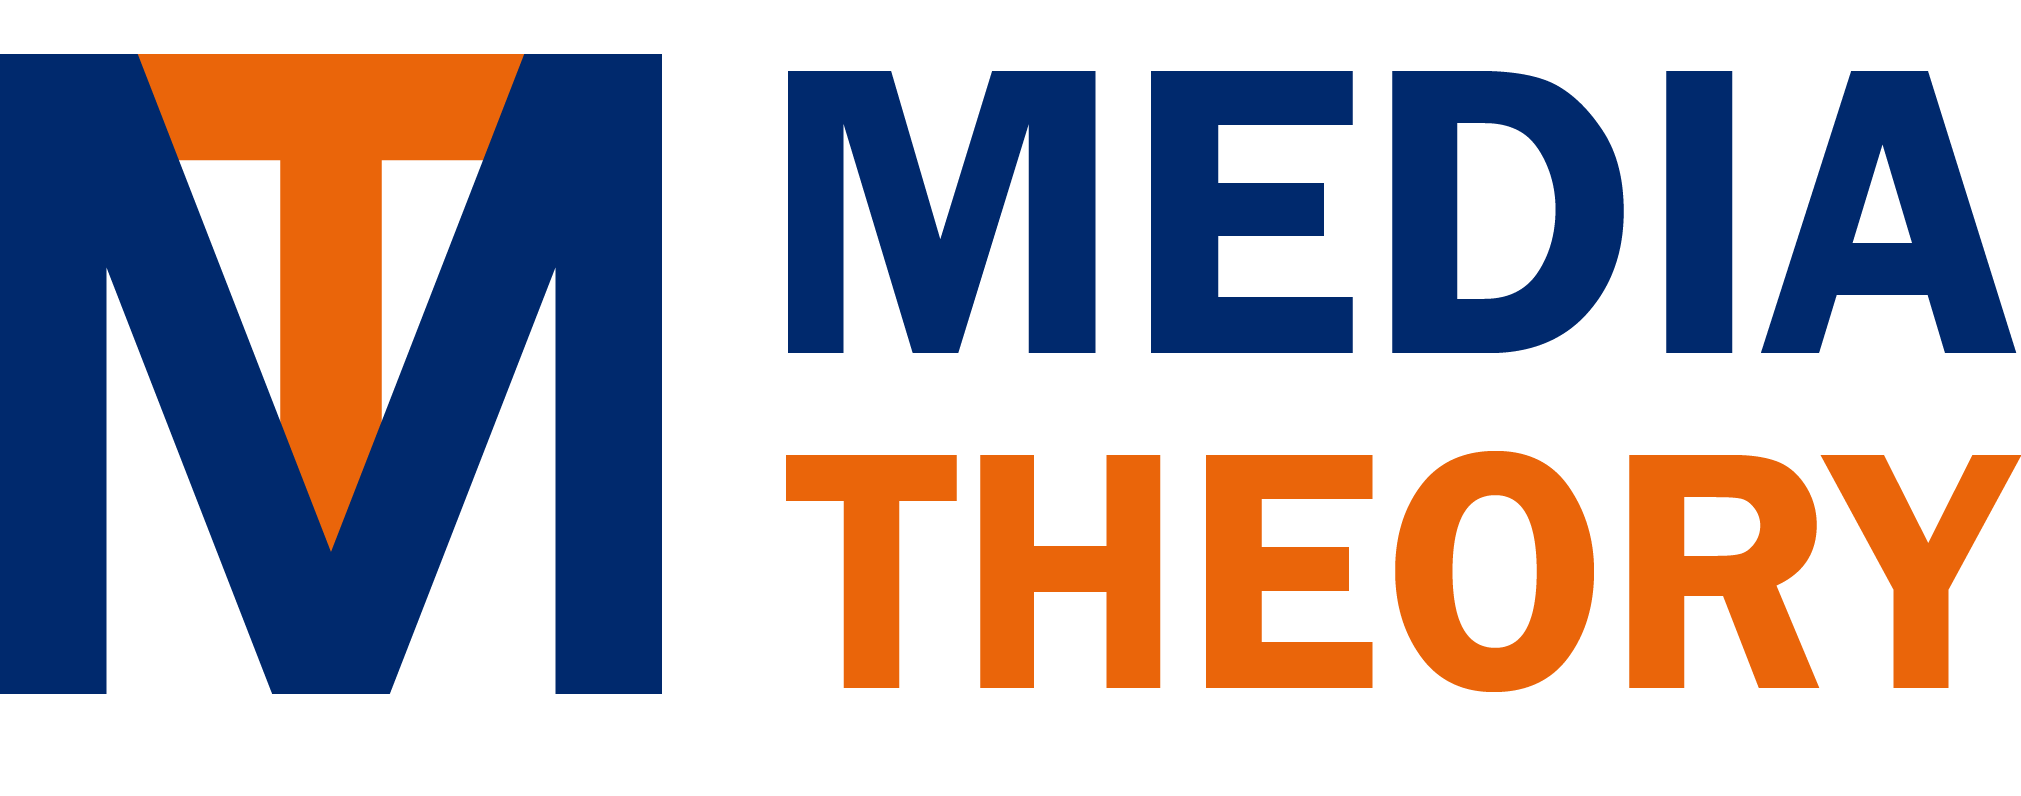 Media Theory | Enhancing Critical Thinking & Media Literacy